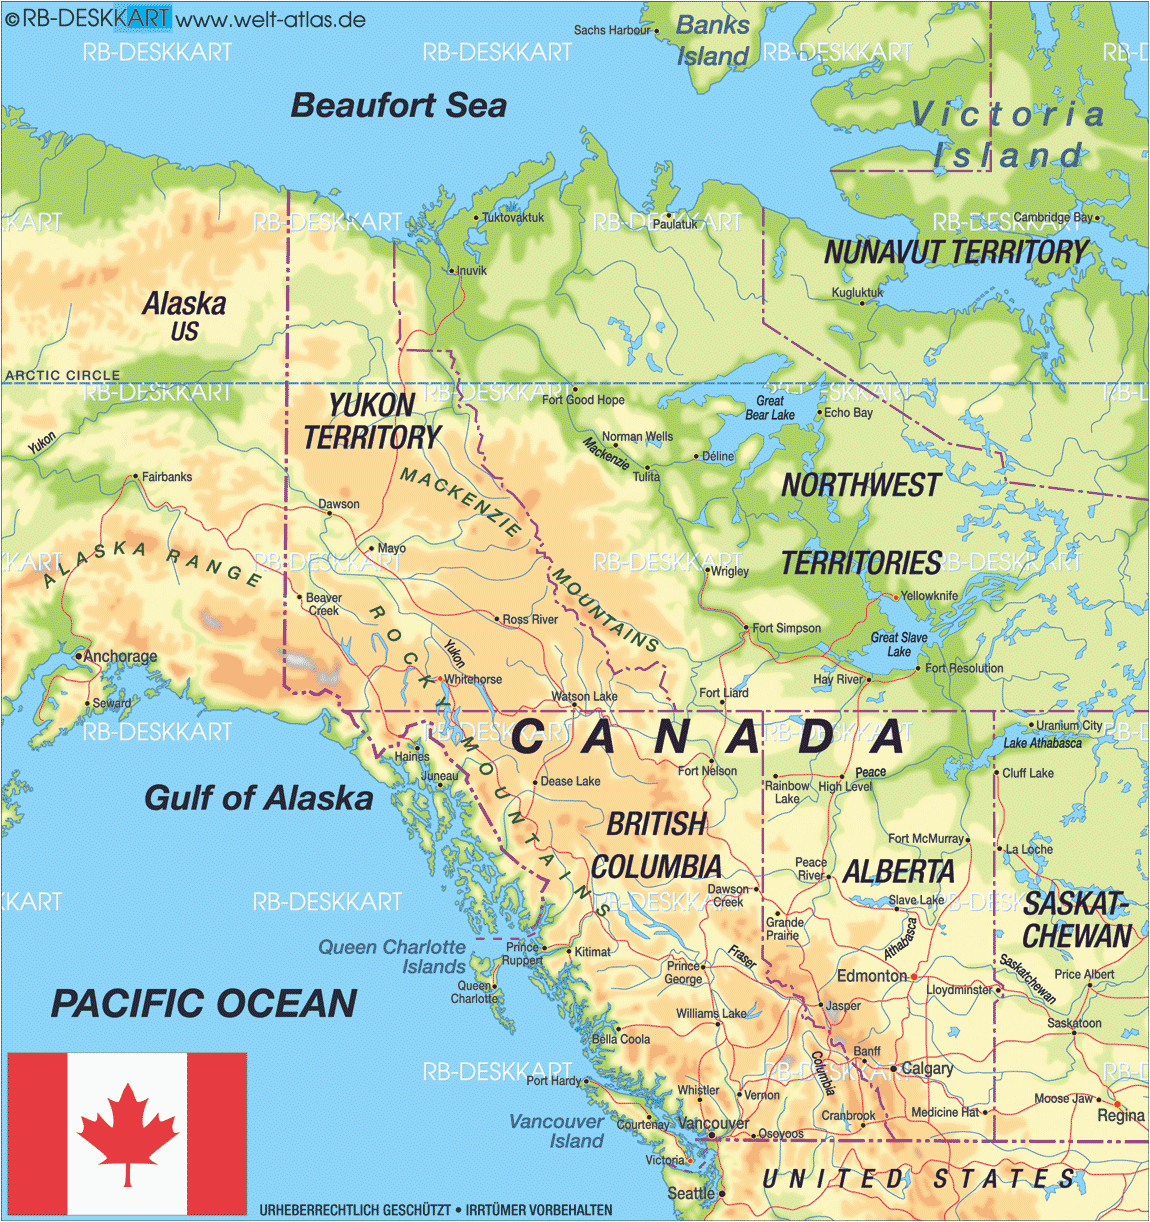 map of canada west region in canada welt atlas de